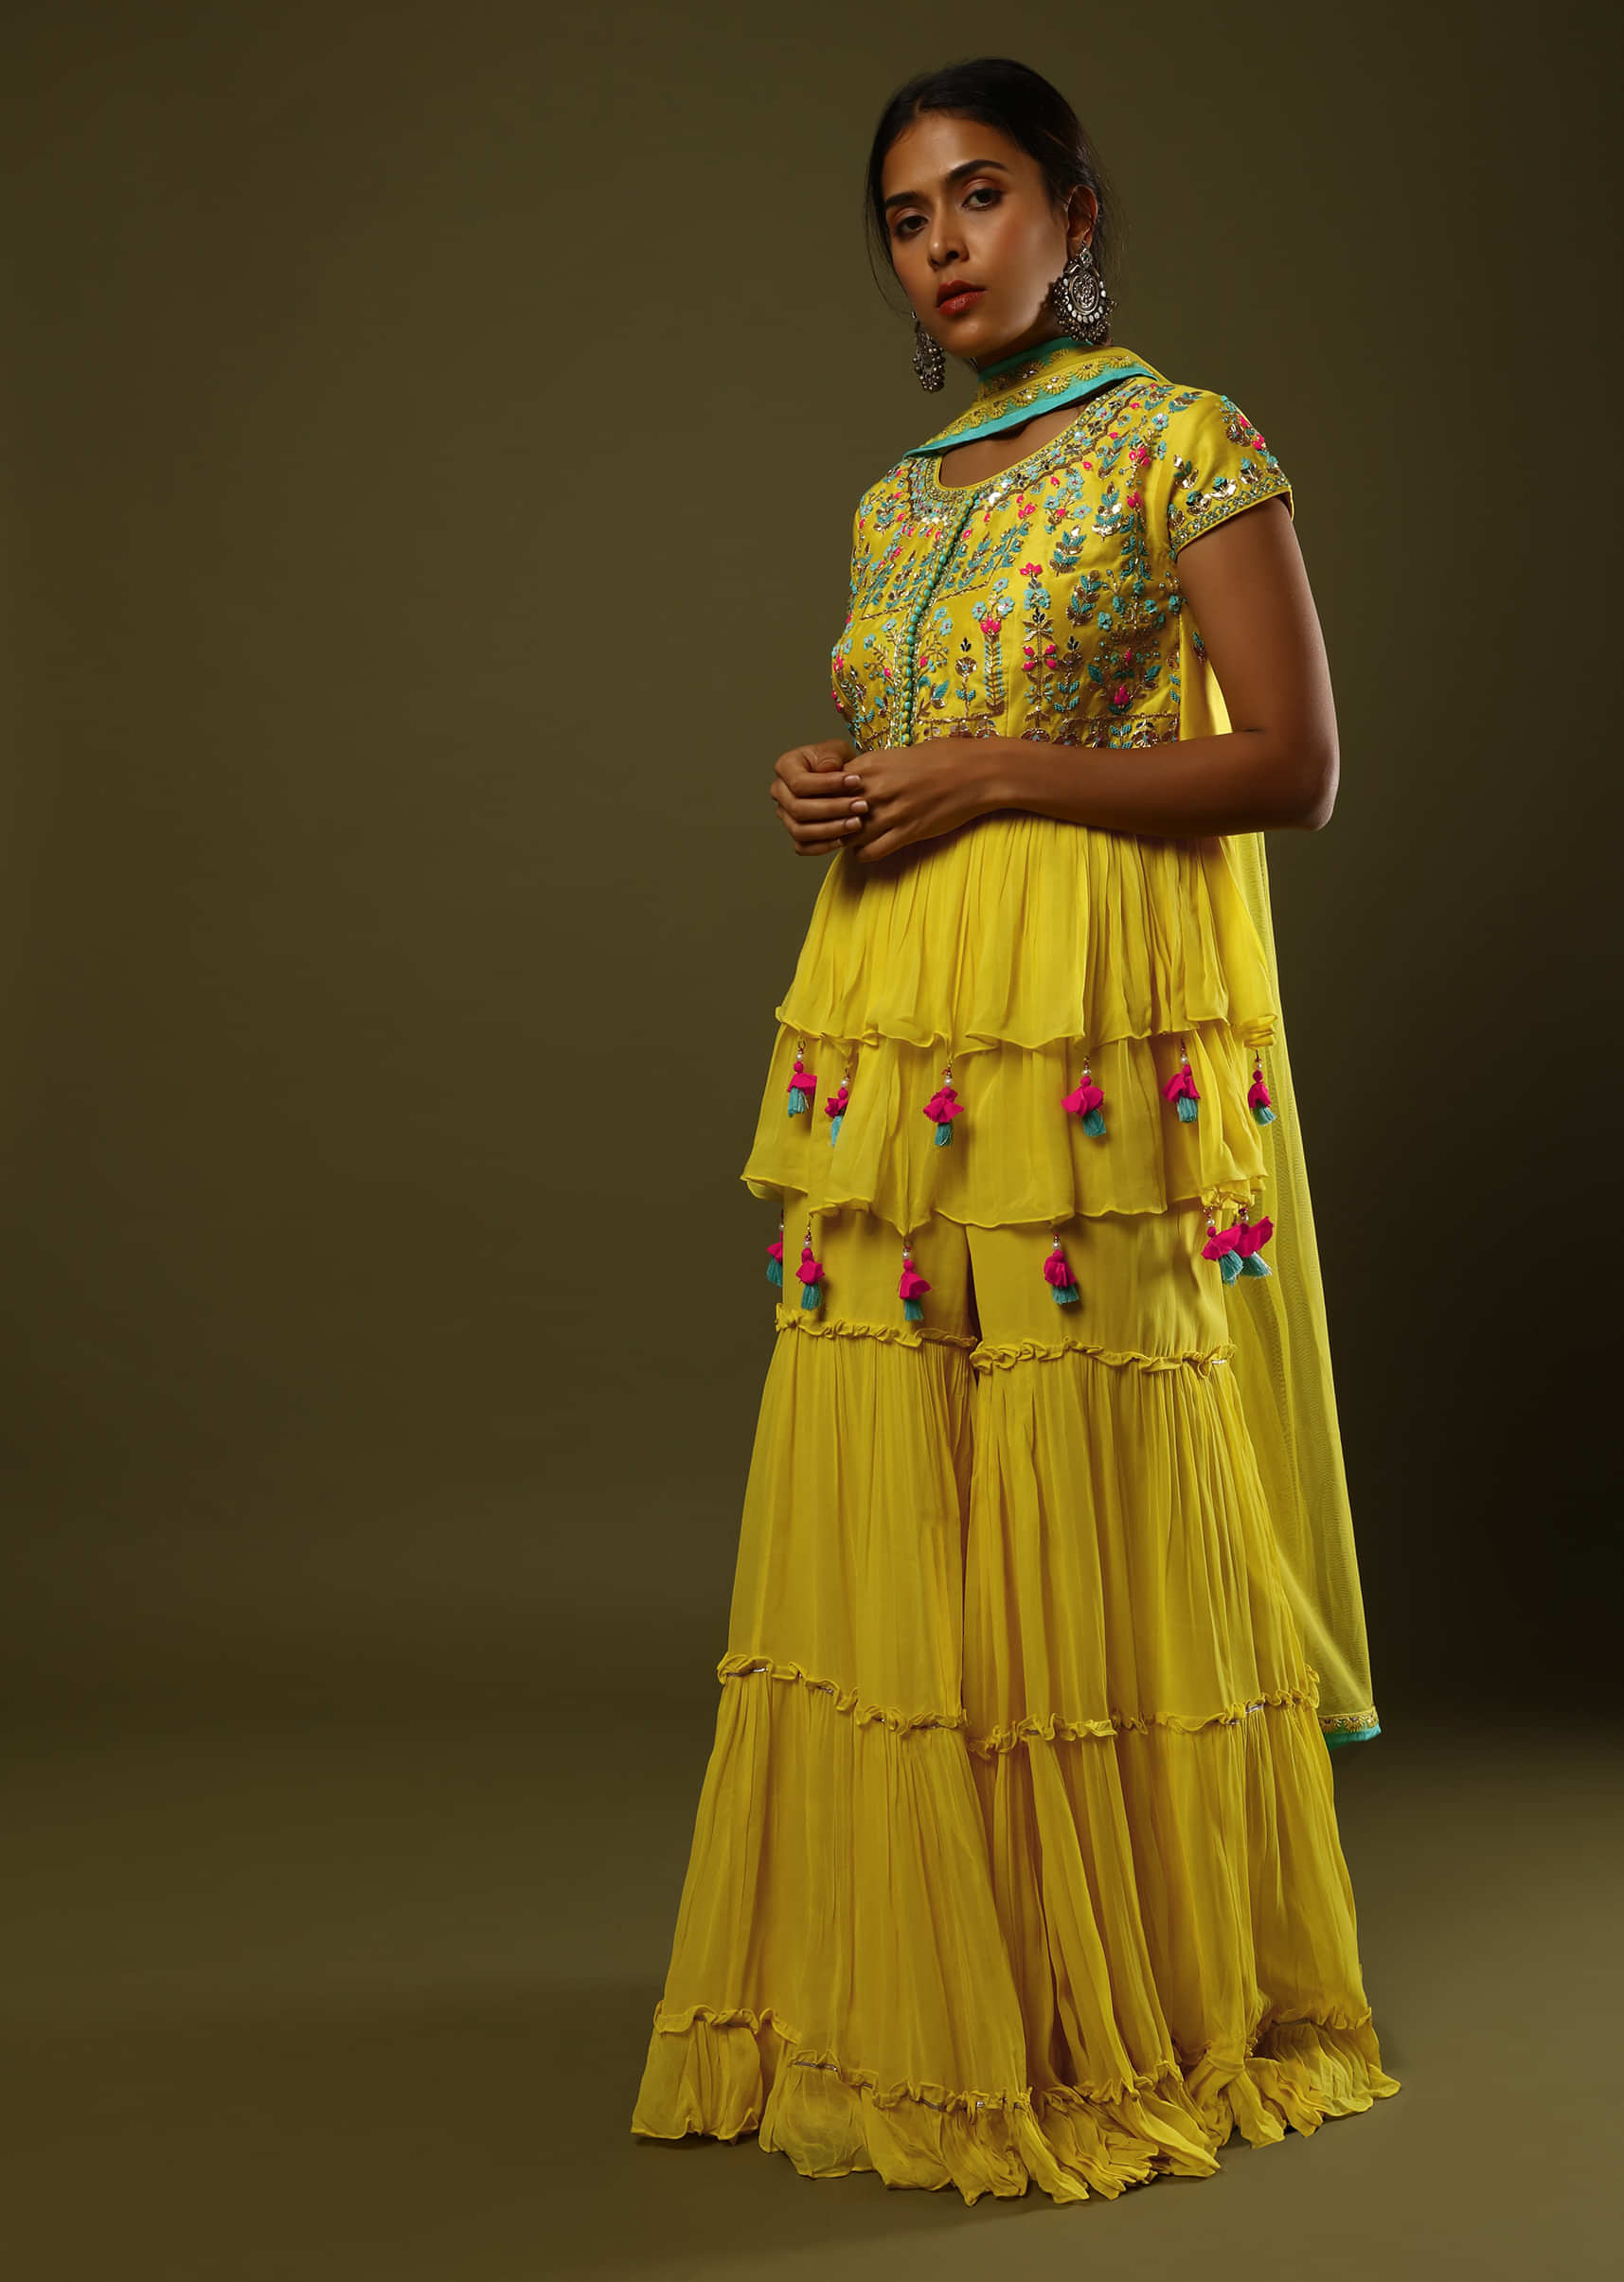 Peplum Dress - Buy Peplum Dress online in India